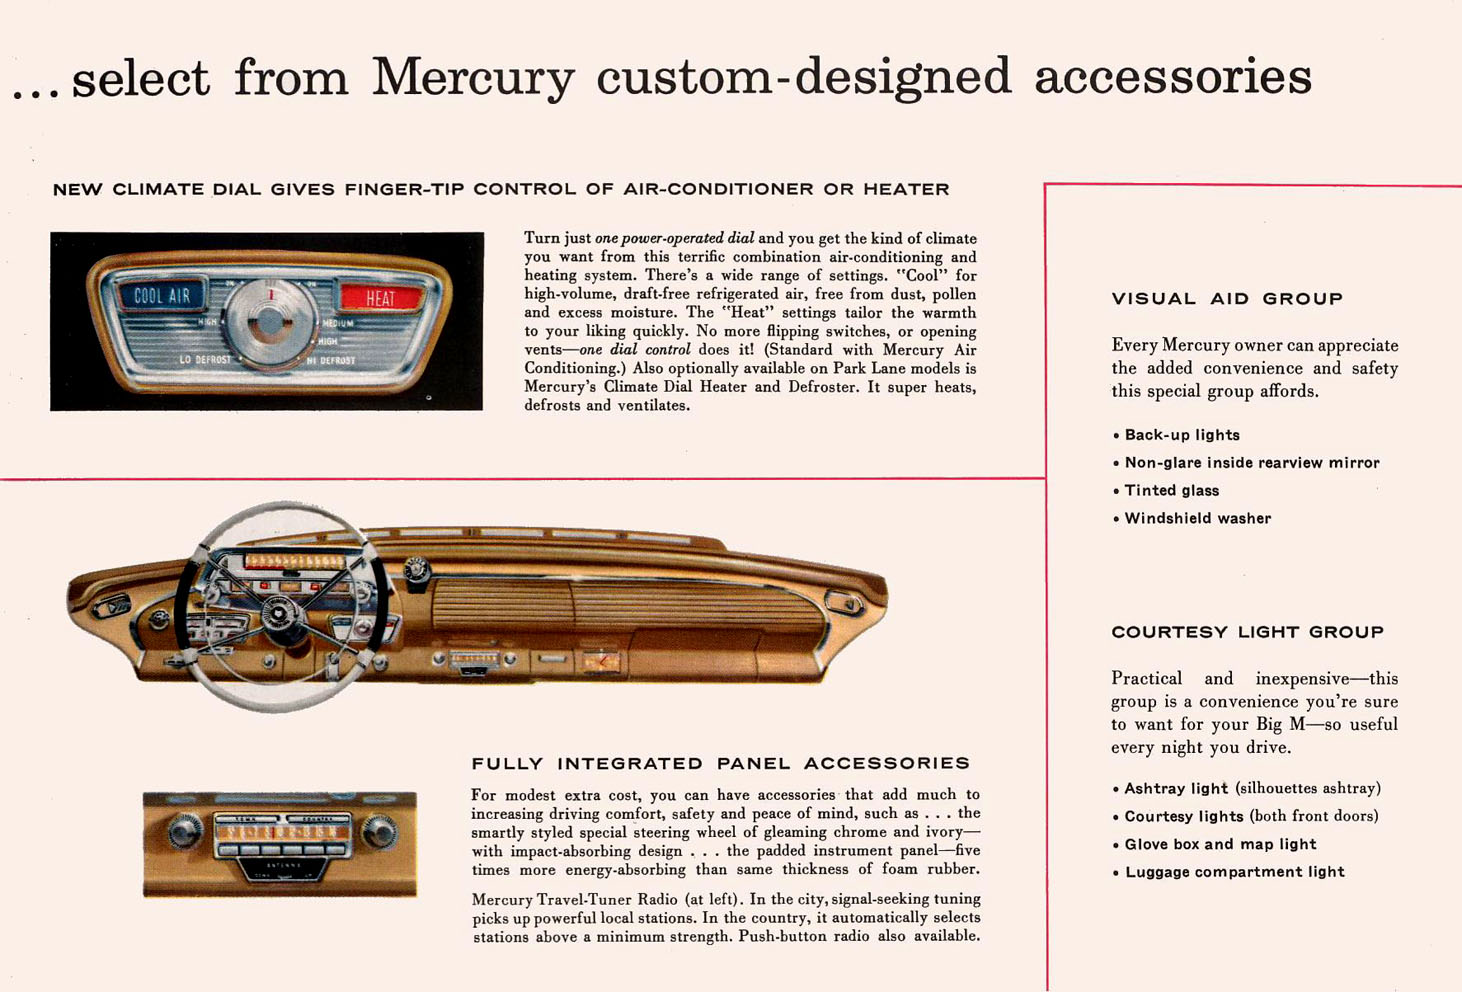 1000+ images about Mercury ..Car brochures on Pinterest | Mercury